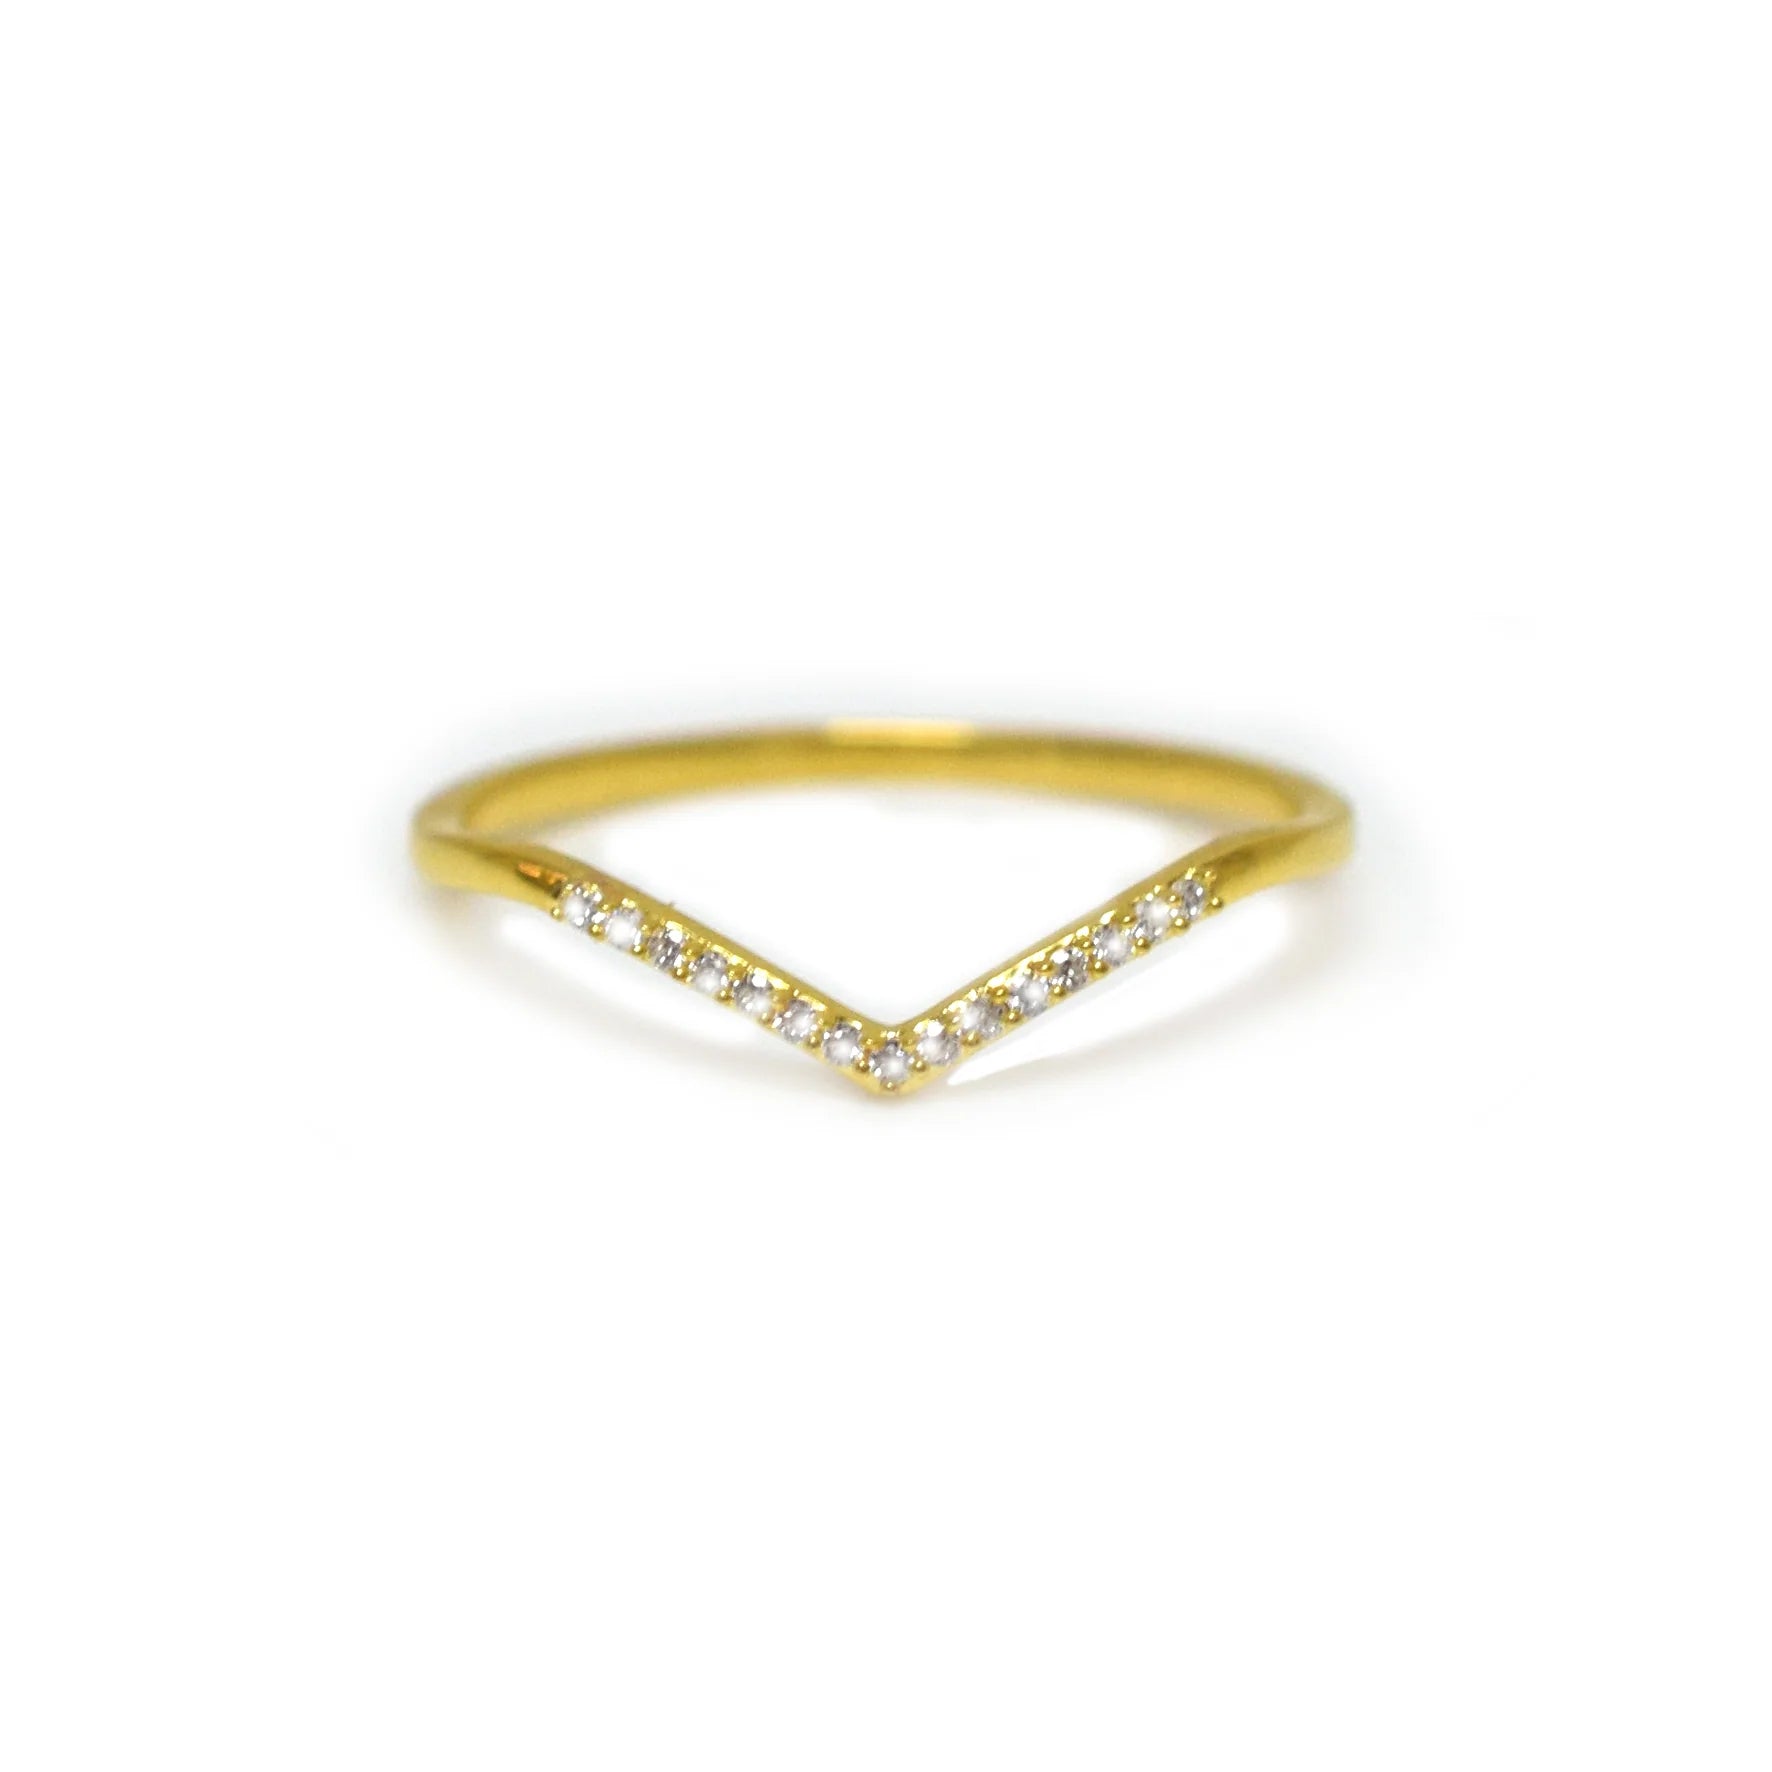 Diamond Victorian Ring from La Kaiser Jewelry